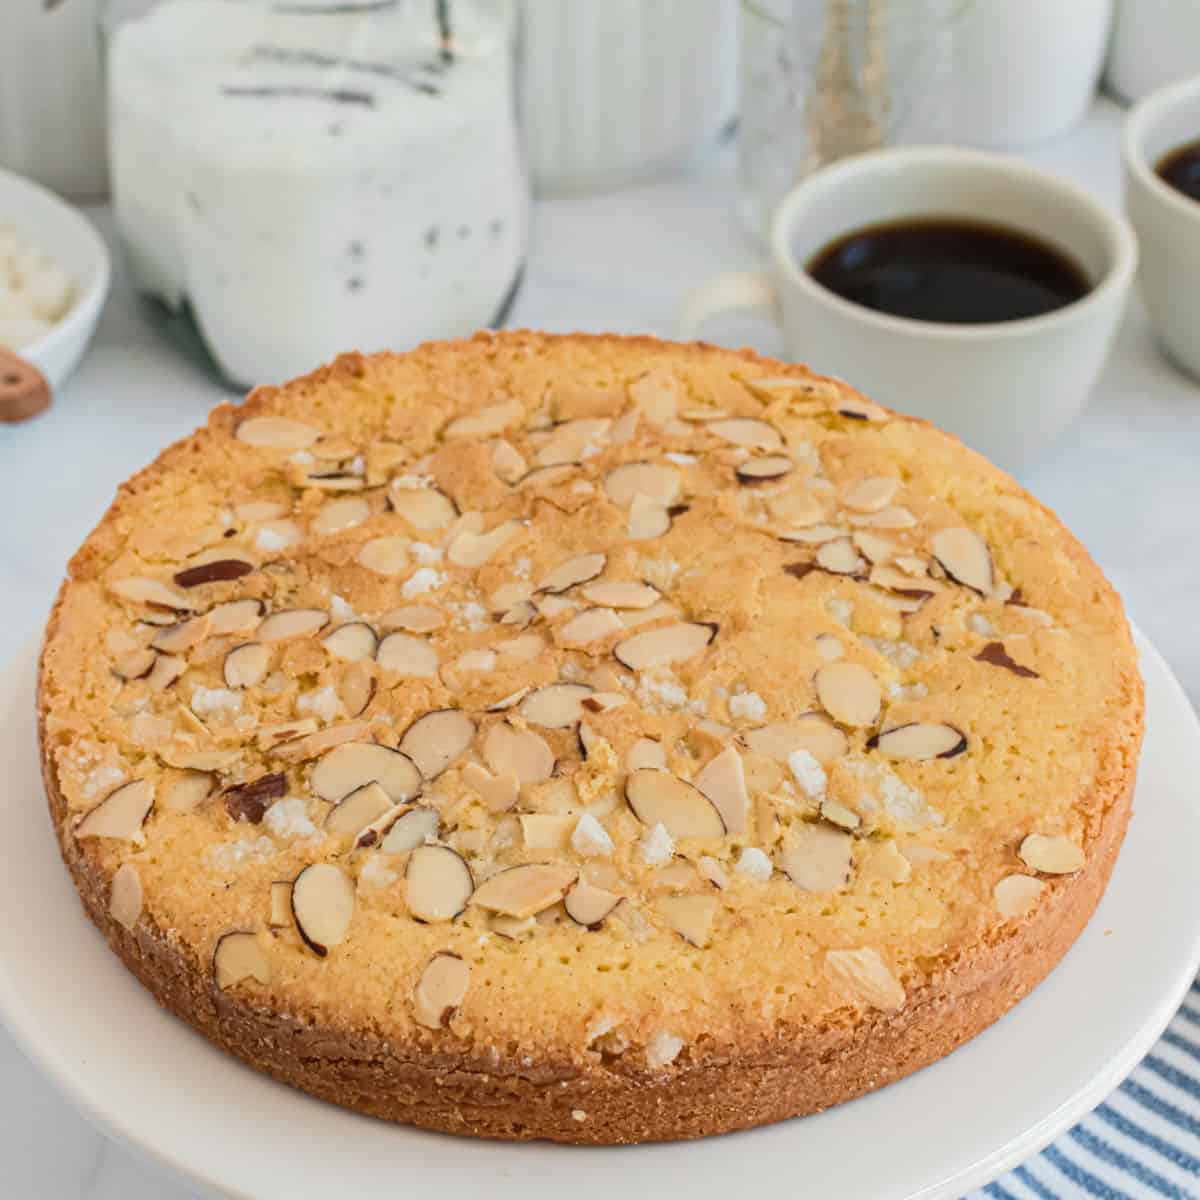 https://www.shugarysweets.com/wp-content/uploads/2020/02/swedish-almond-cake-recipe.jpg